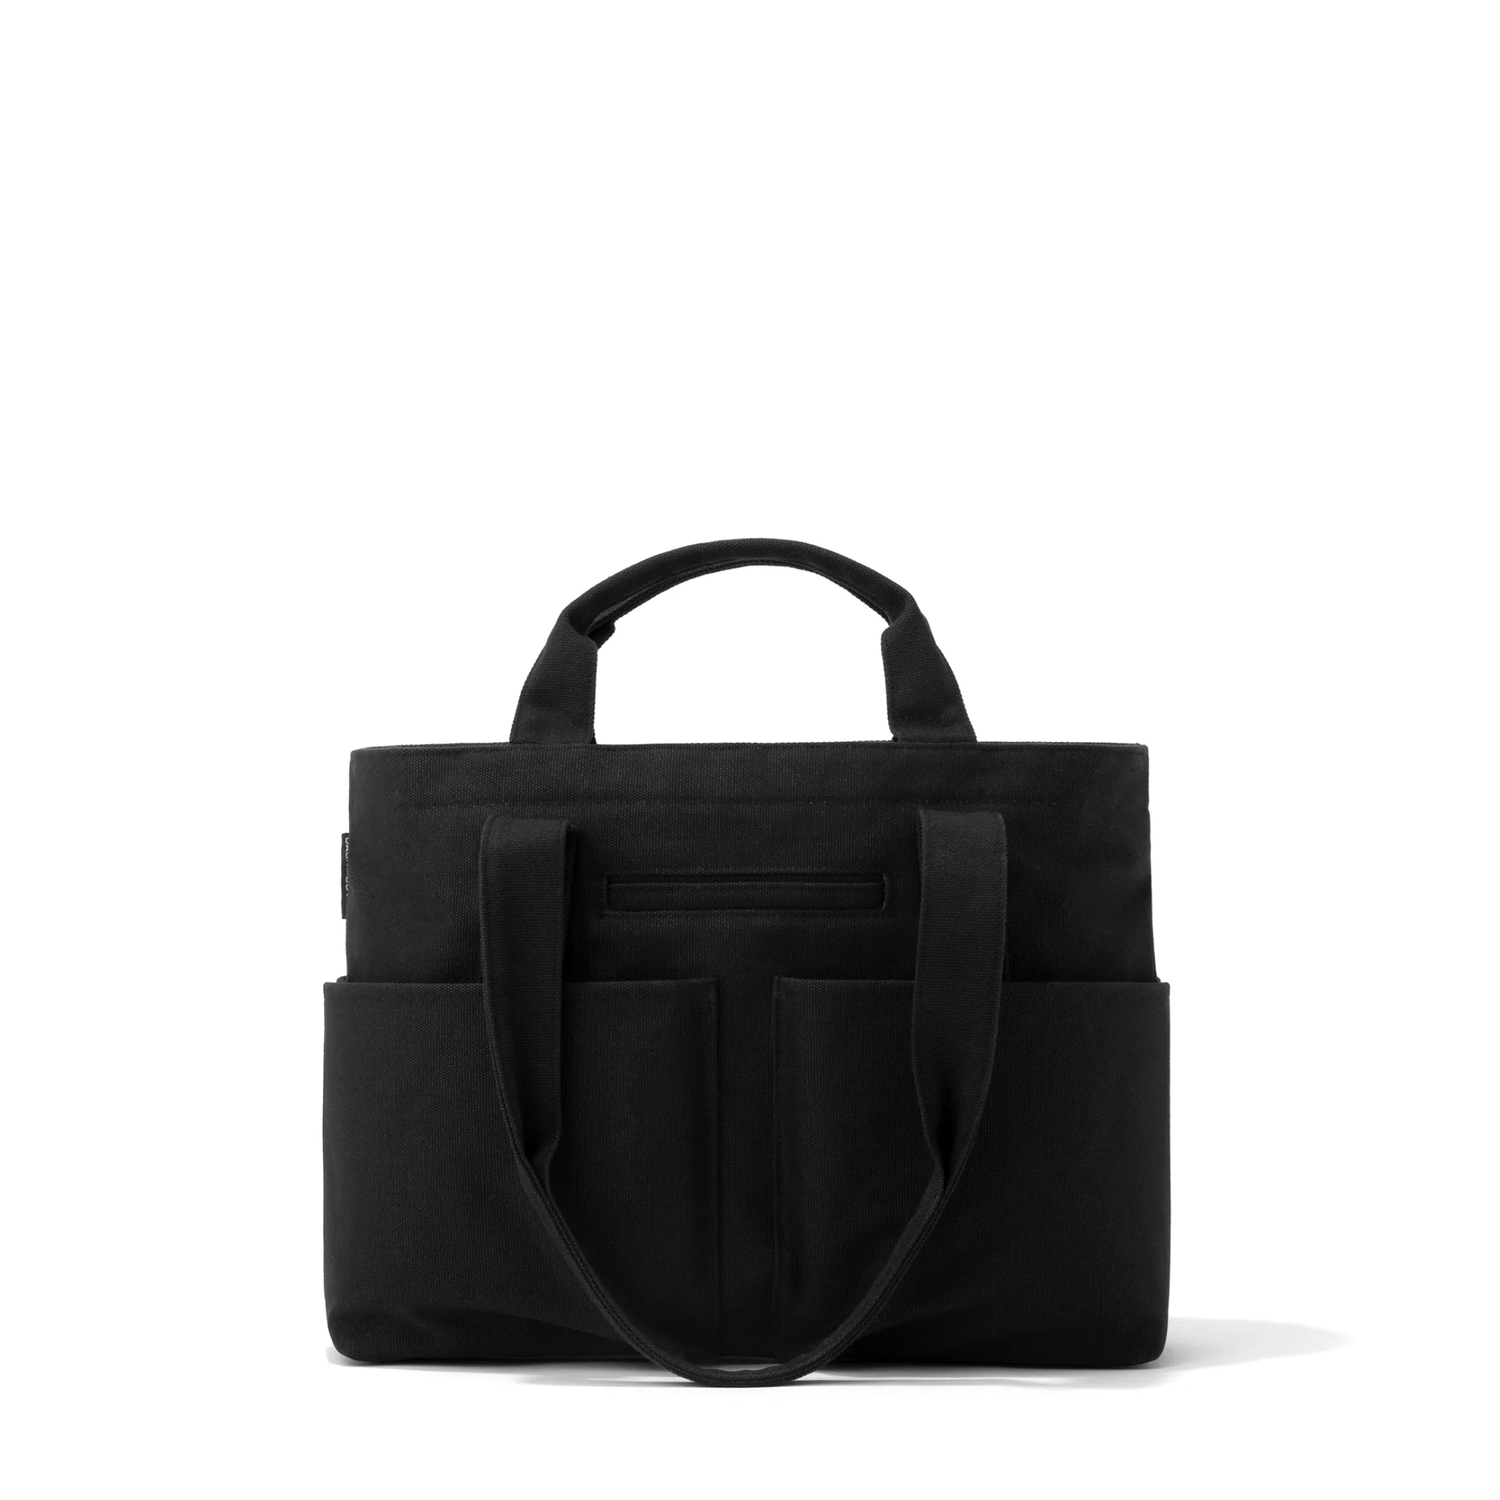 47 Handbag Display & Storage ideas  handbag display, handbag storage, purse  storage